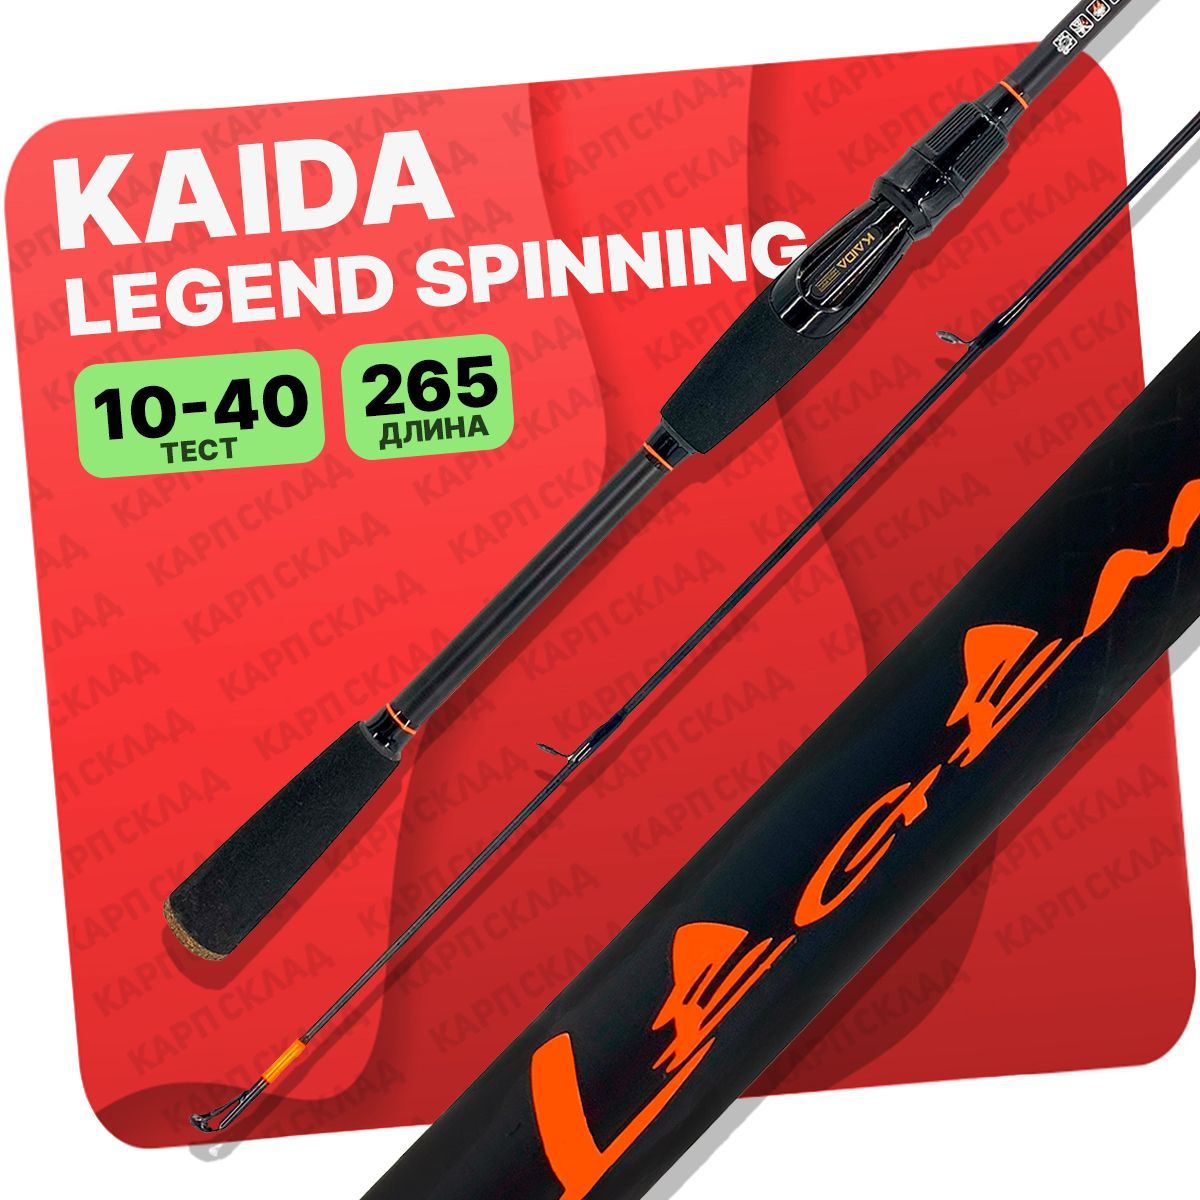 Legend spin. ￼ спиннинг штекерный Kaida Legend Spinning Carbon тест 10-40гр 2,28м. Спиннинг штекерный "Admiral" Striker Carbon Test 5-20g.